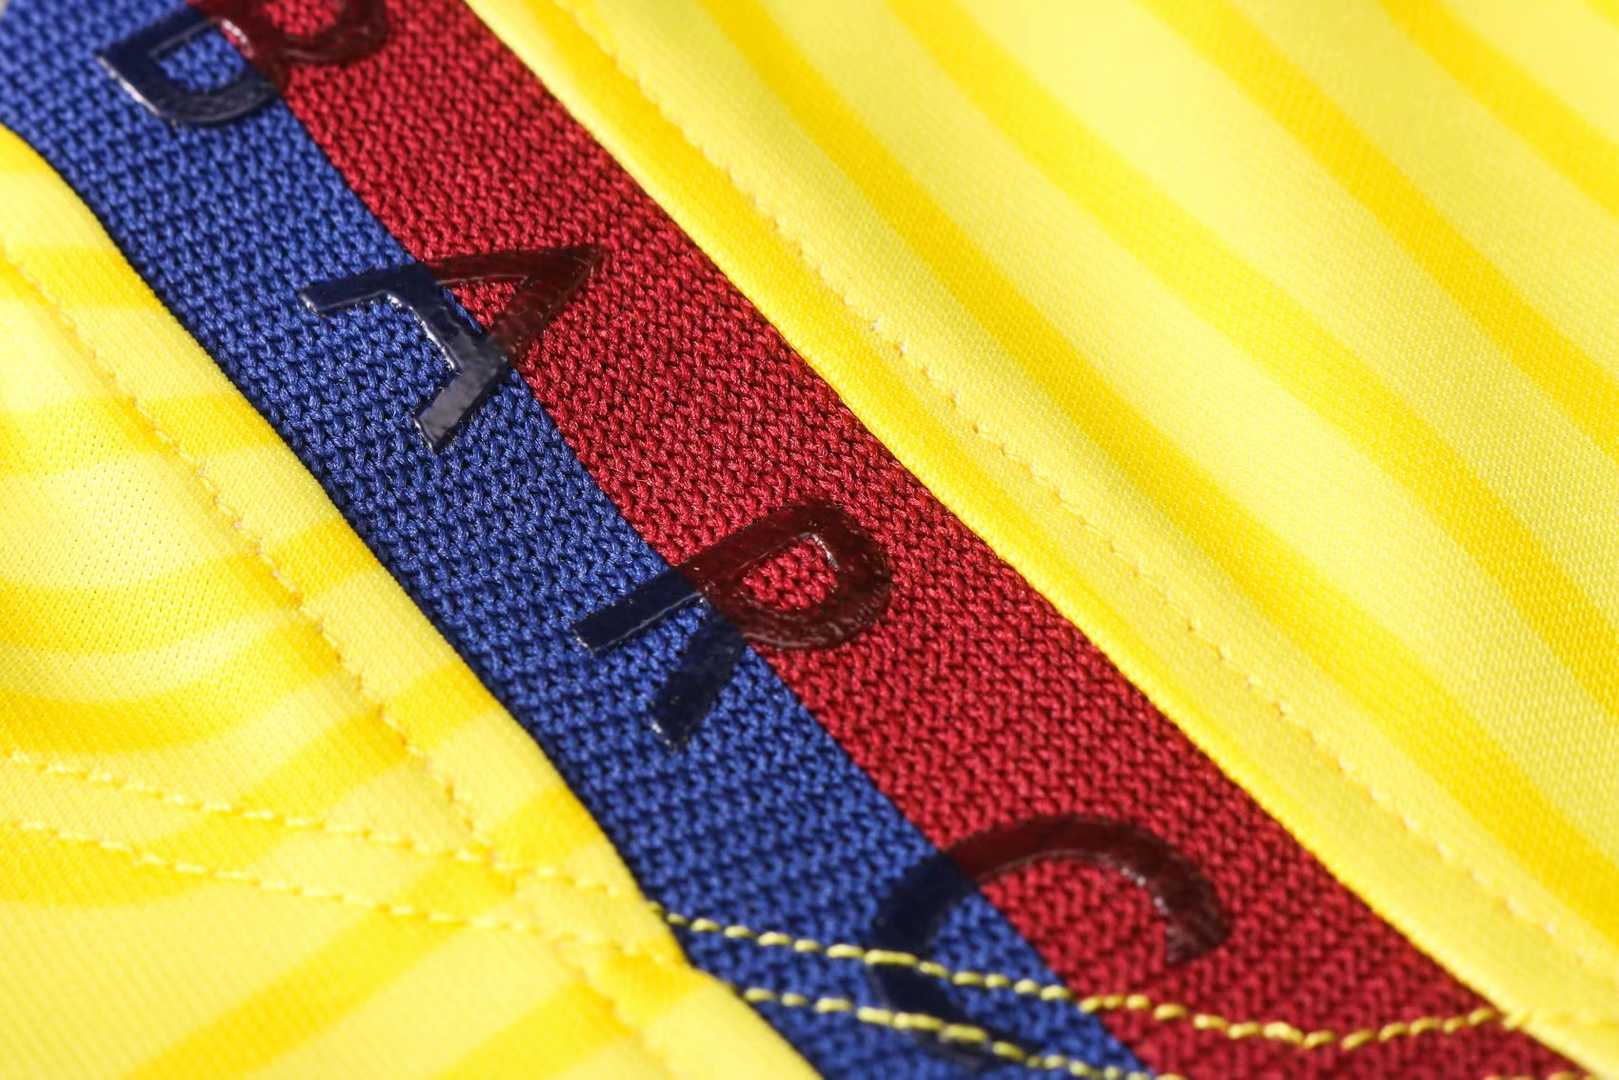 2020/21 Barcelona Yellow Mens Soccer Polo Jersey